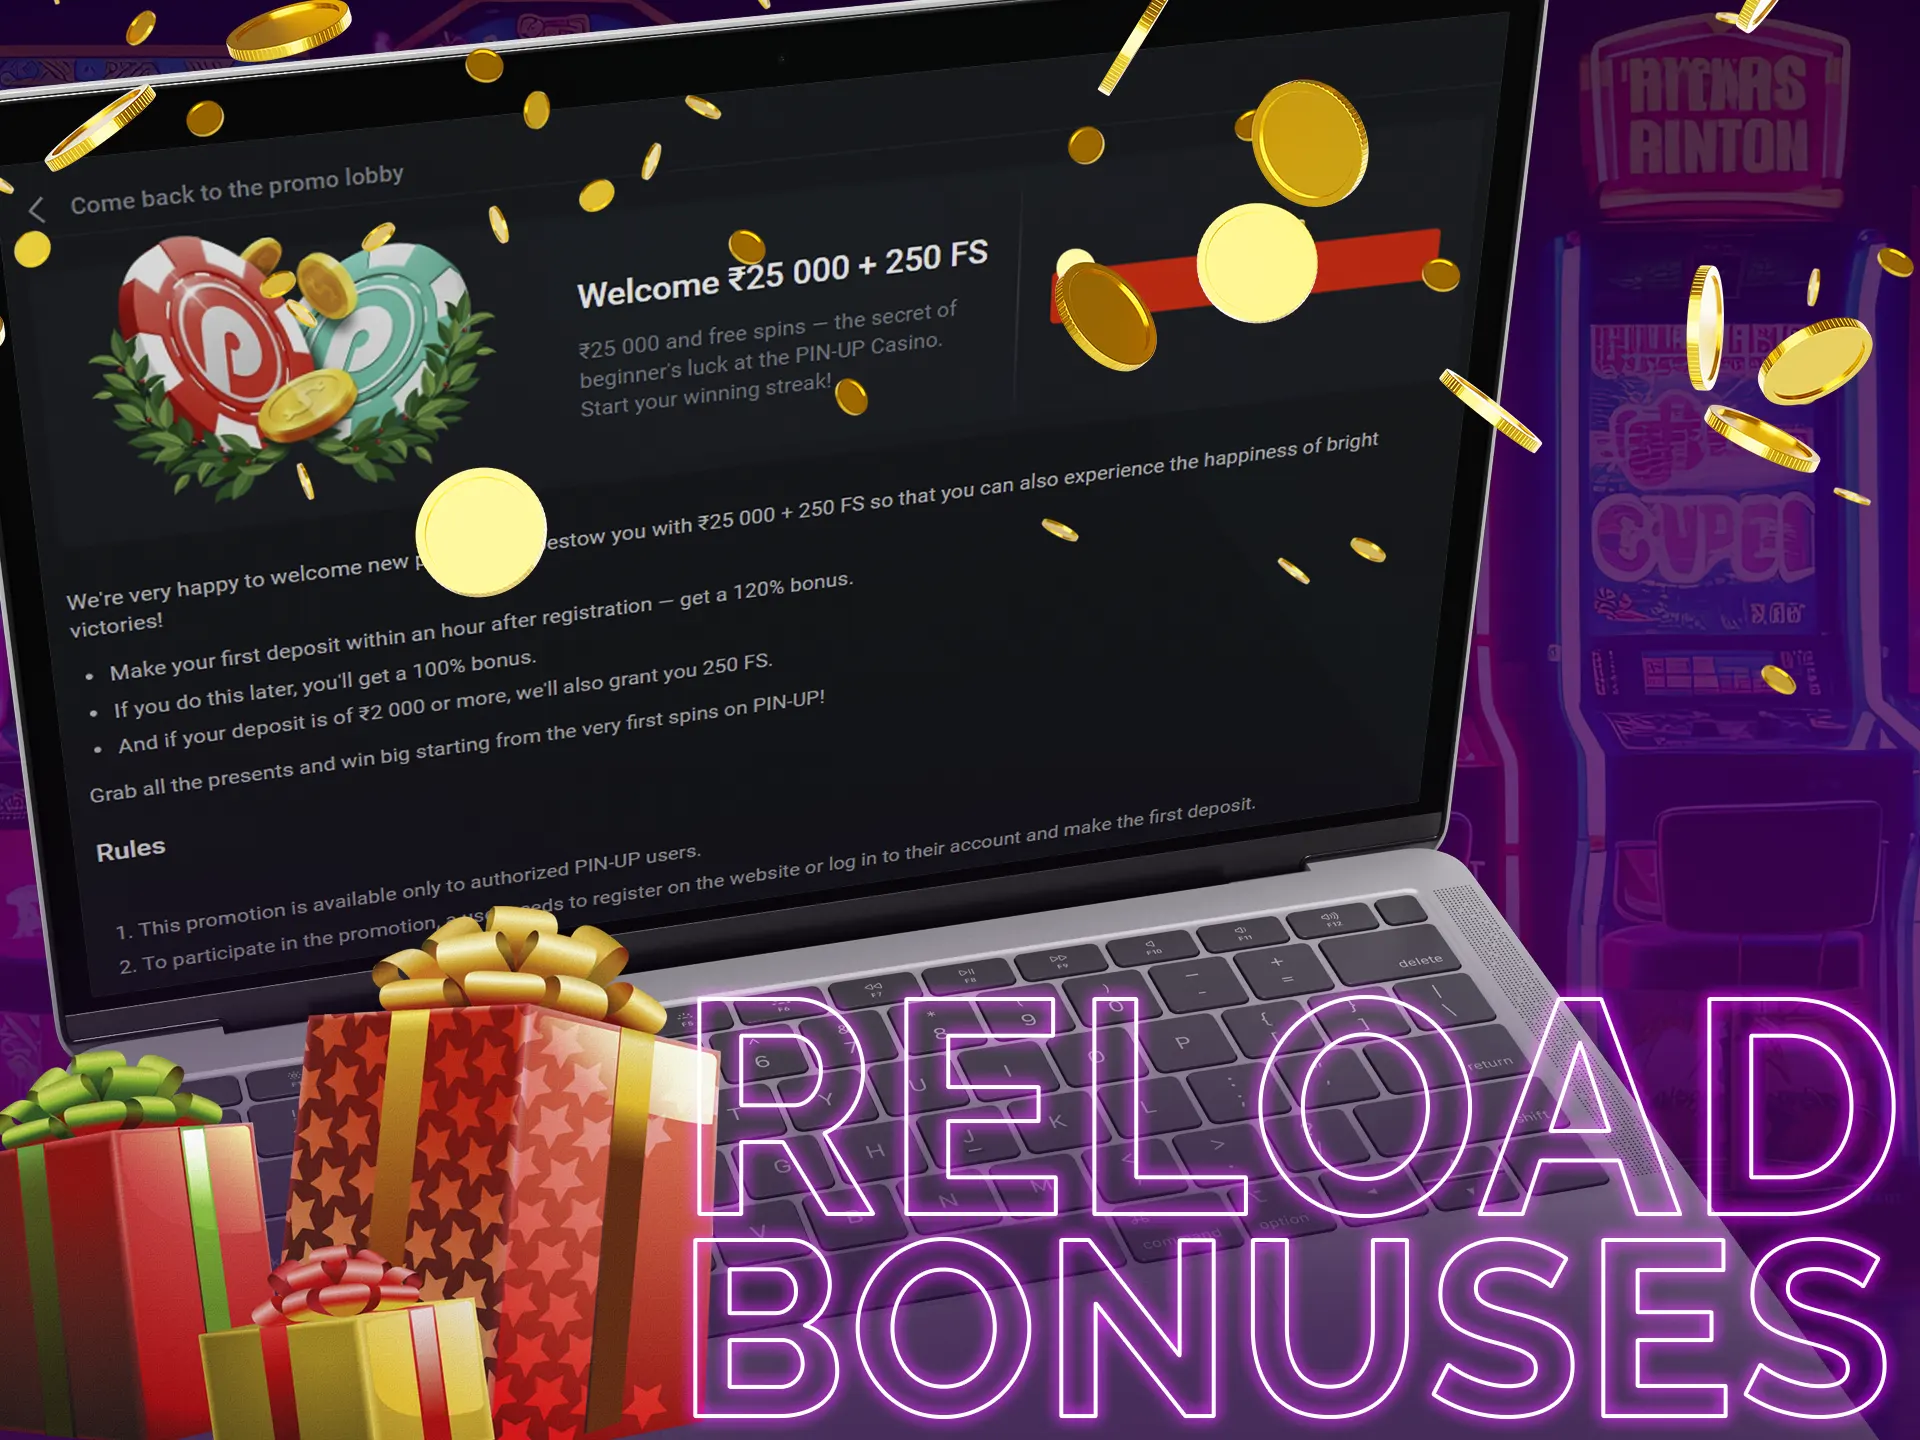 Reload bonuses giving you additional amounts of money.